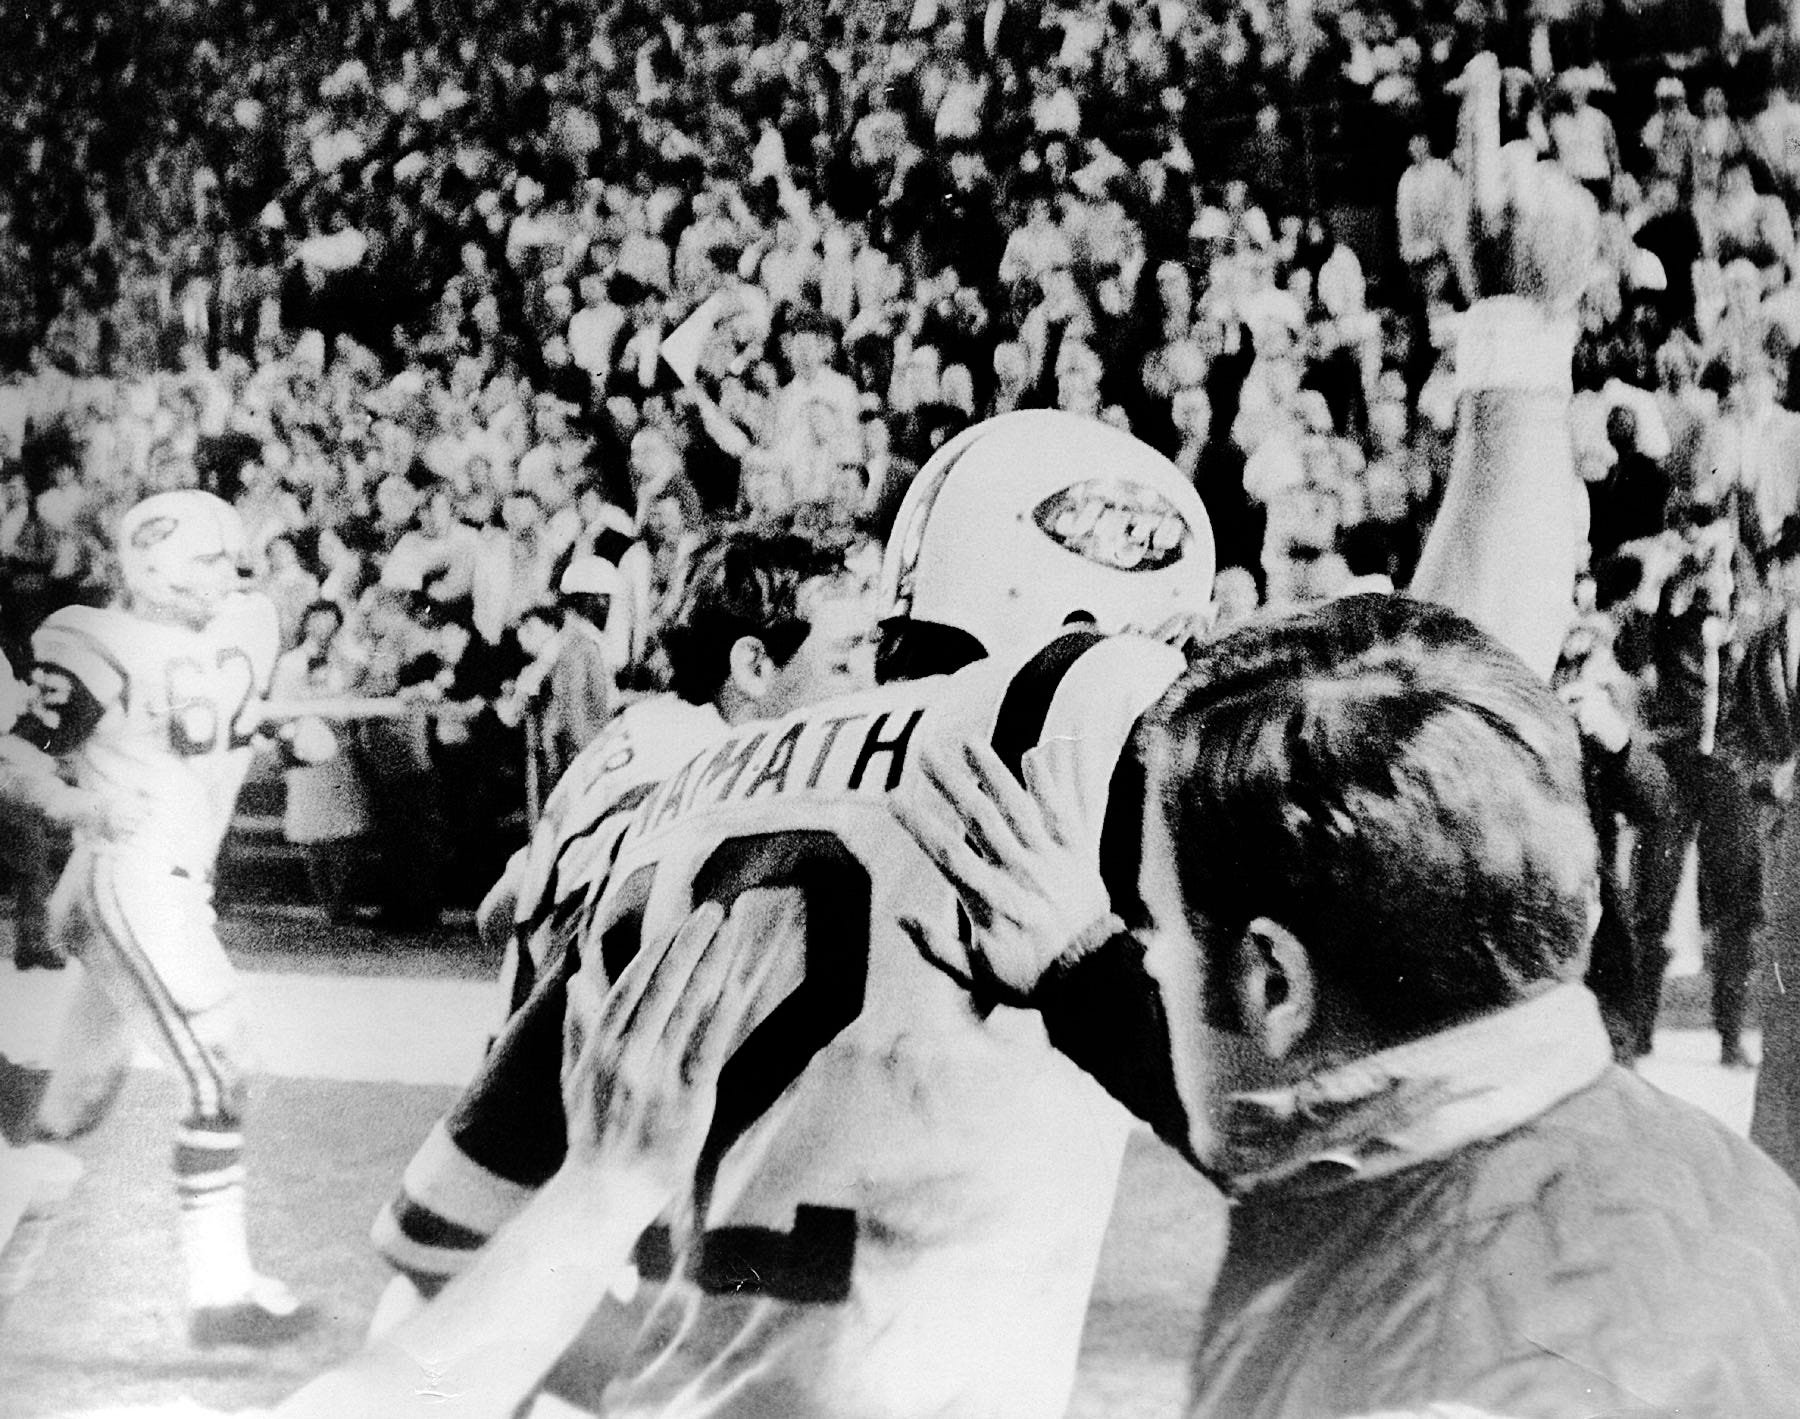 January 12, 1969: Joe Namath celebrates the New York Jets